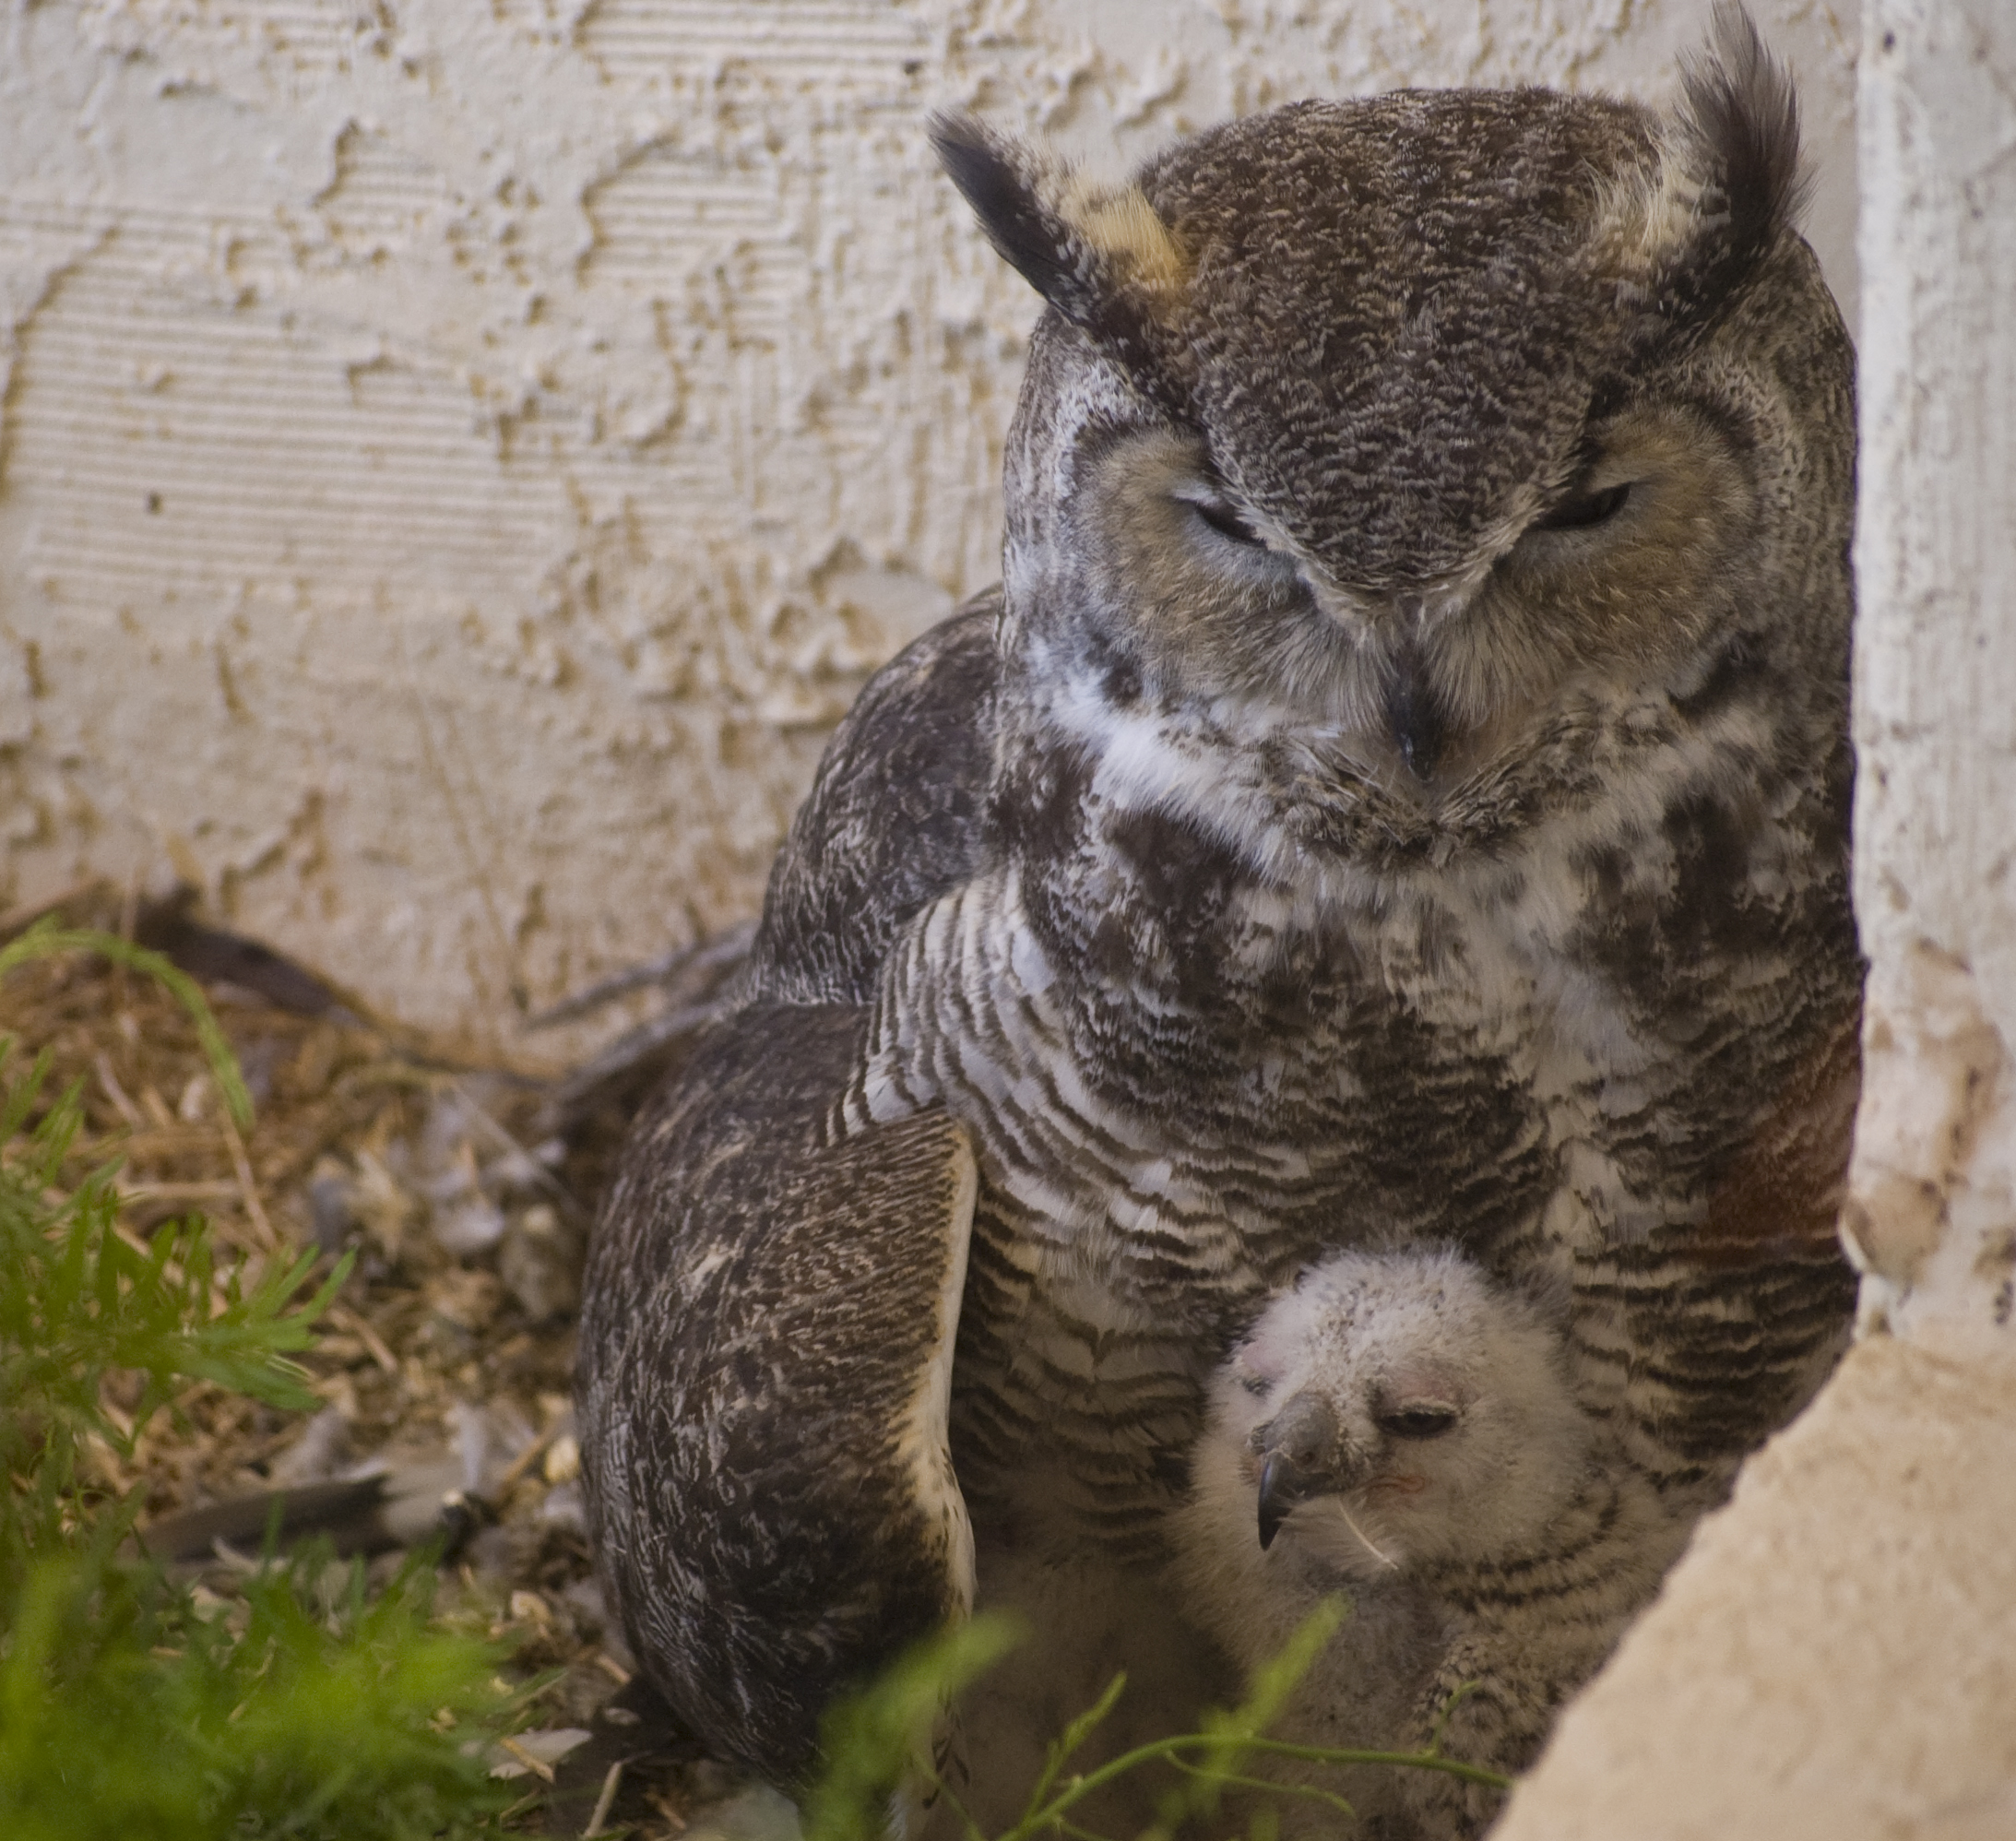 Birdeez Bird Father of the Year: The Great-Horned Owl | Birdeez Blog